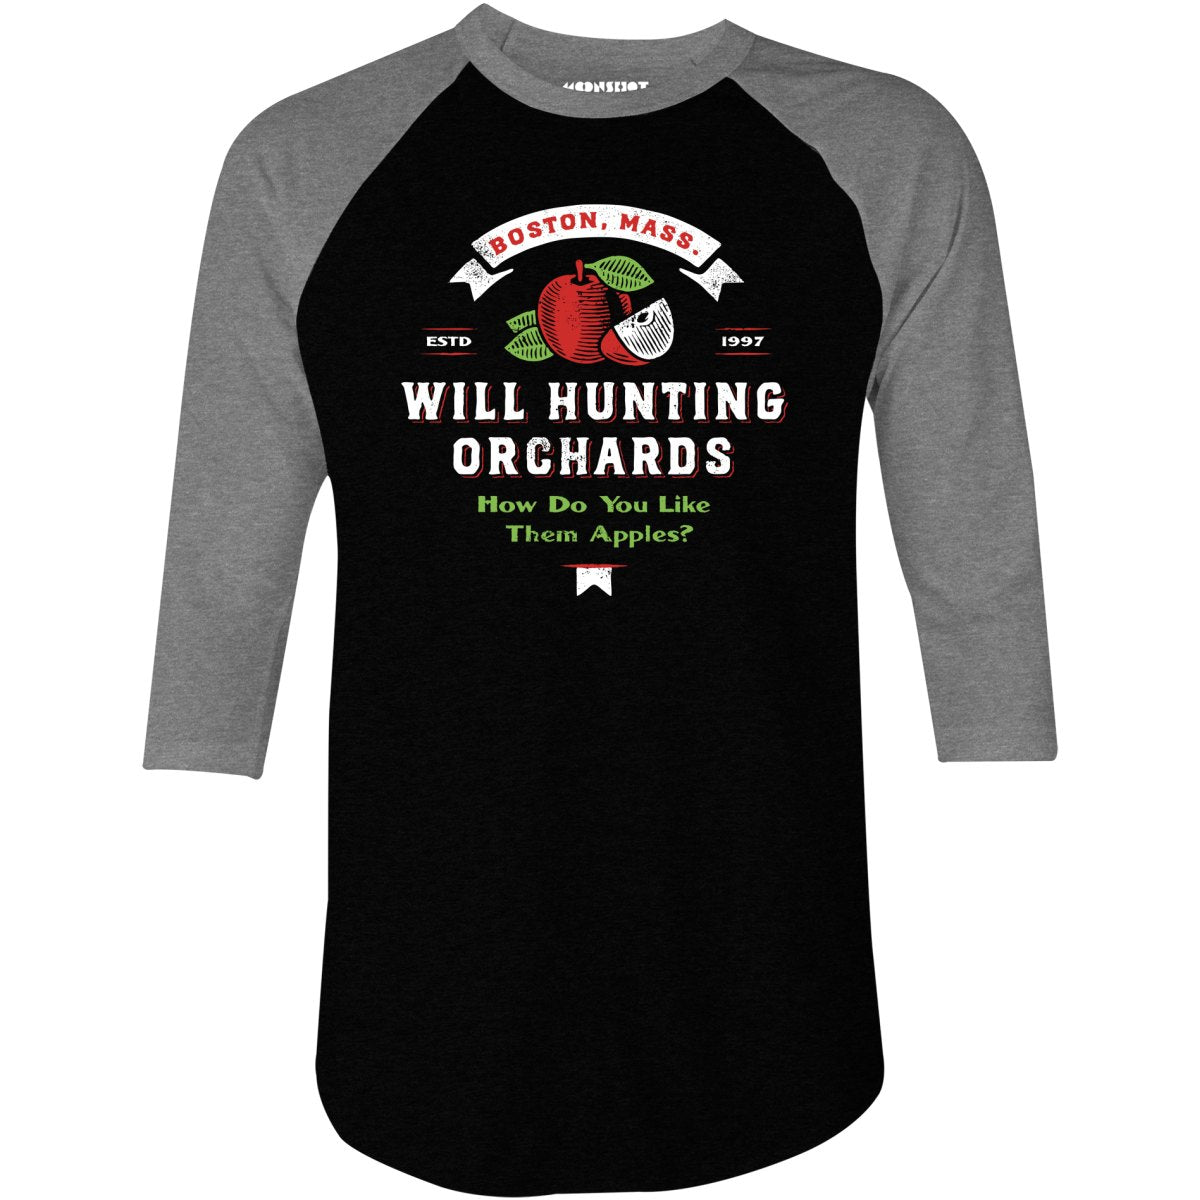 Will Hunting Orchards - 3/4 Sleeve Raglan T-Shirt